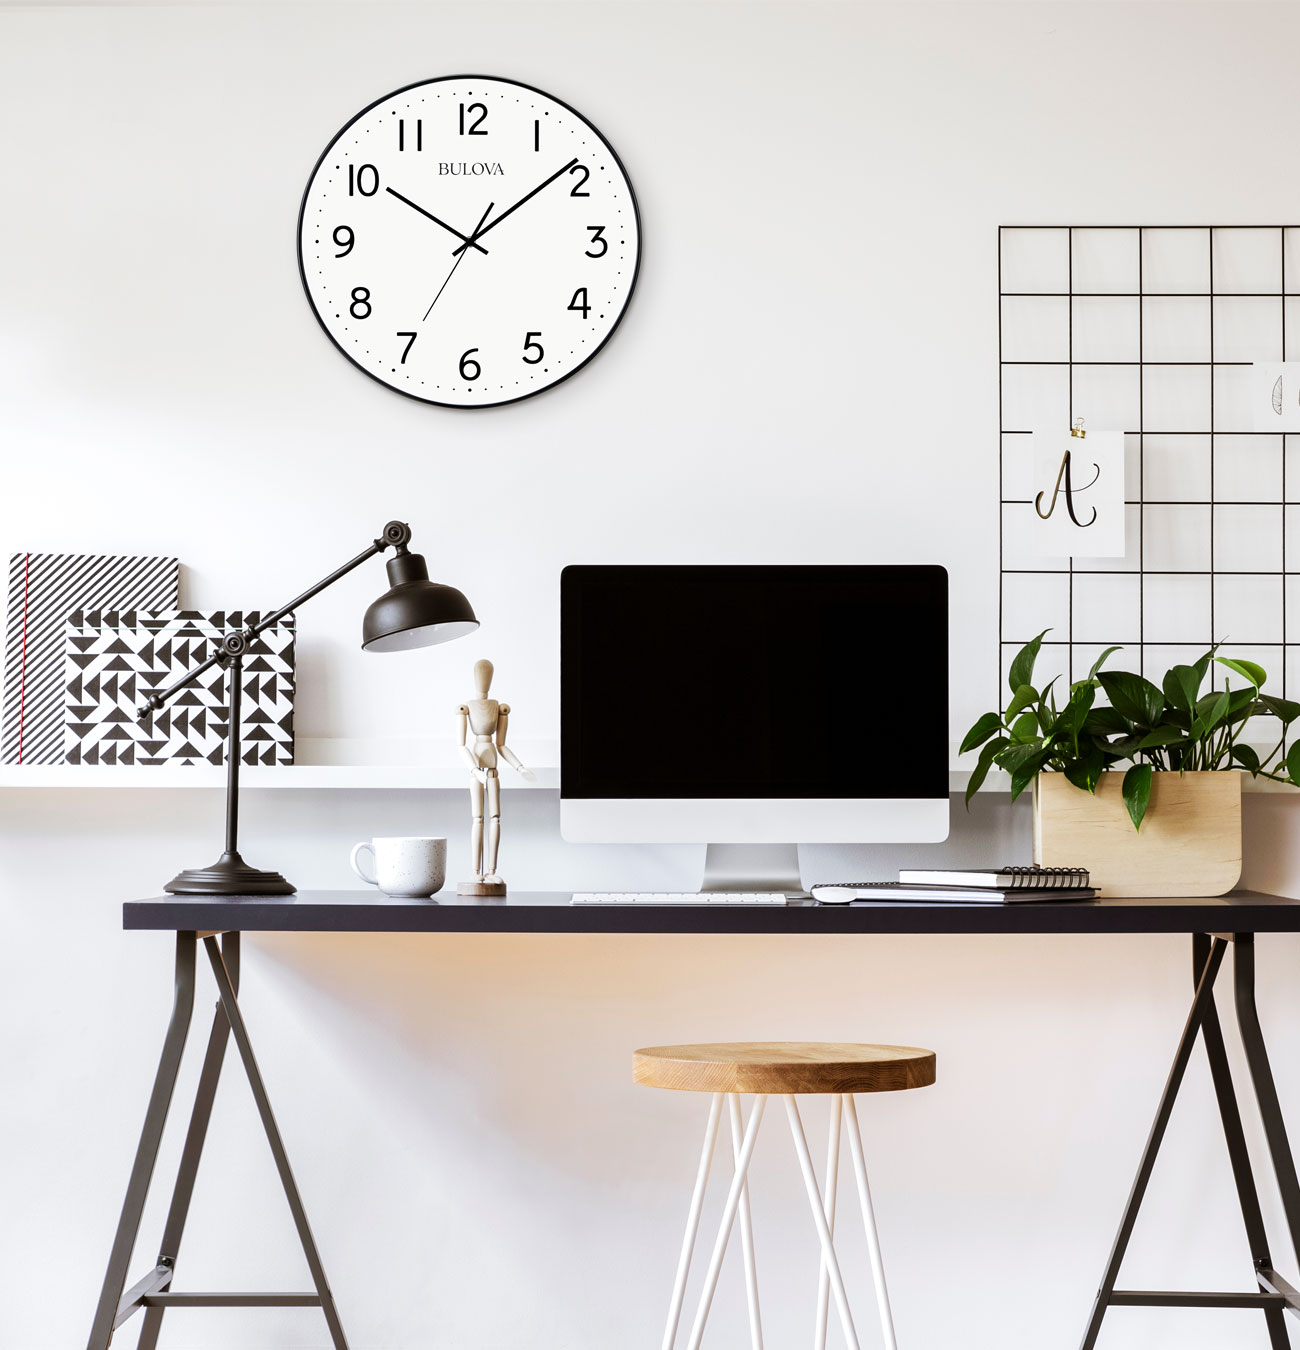 C4832 - Office Mate by Bulova Clocks